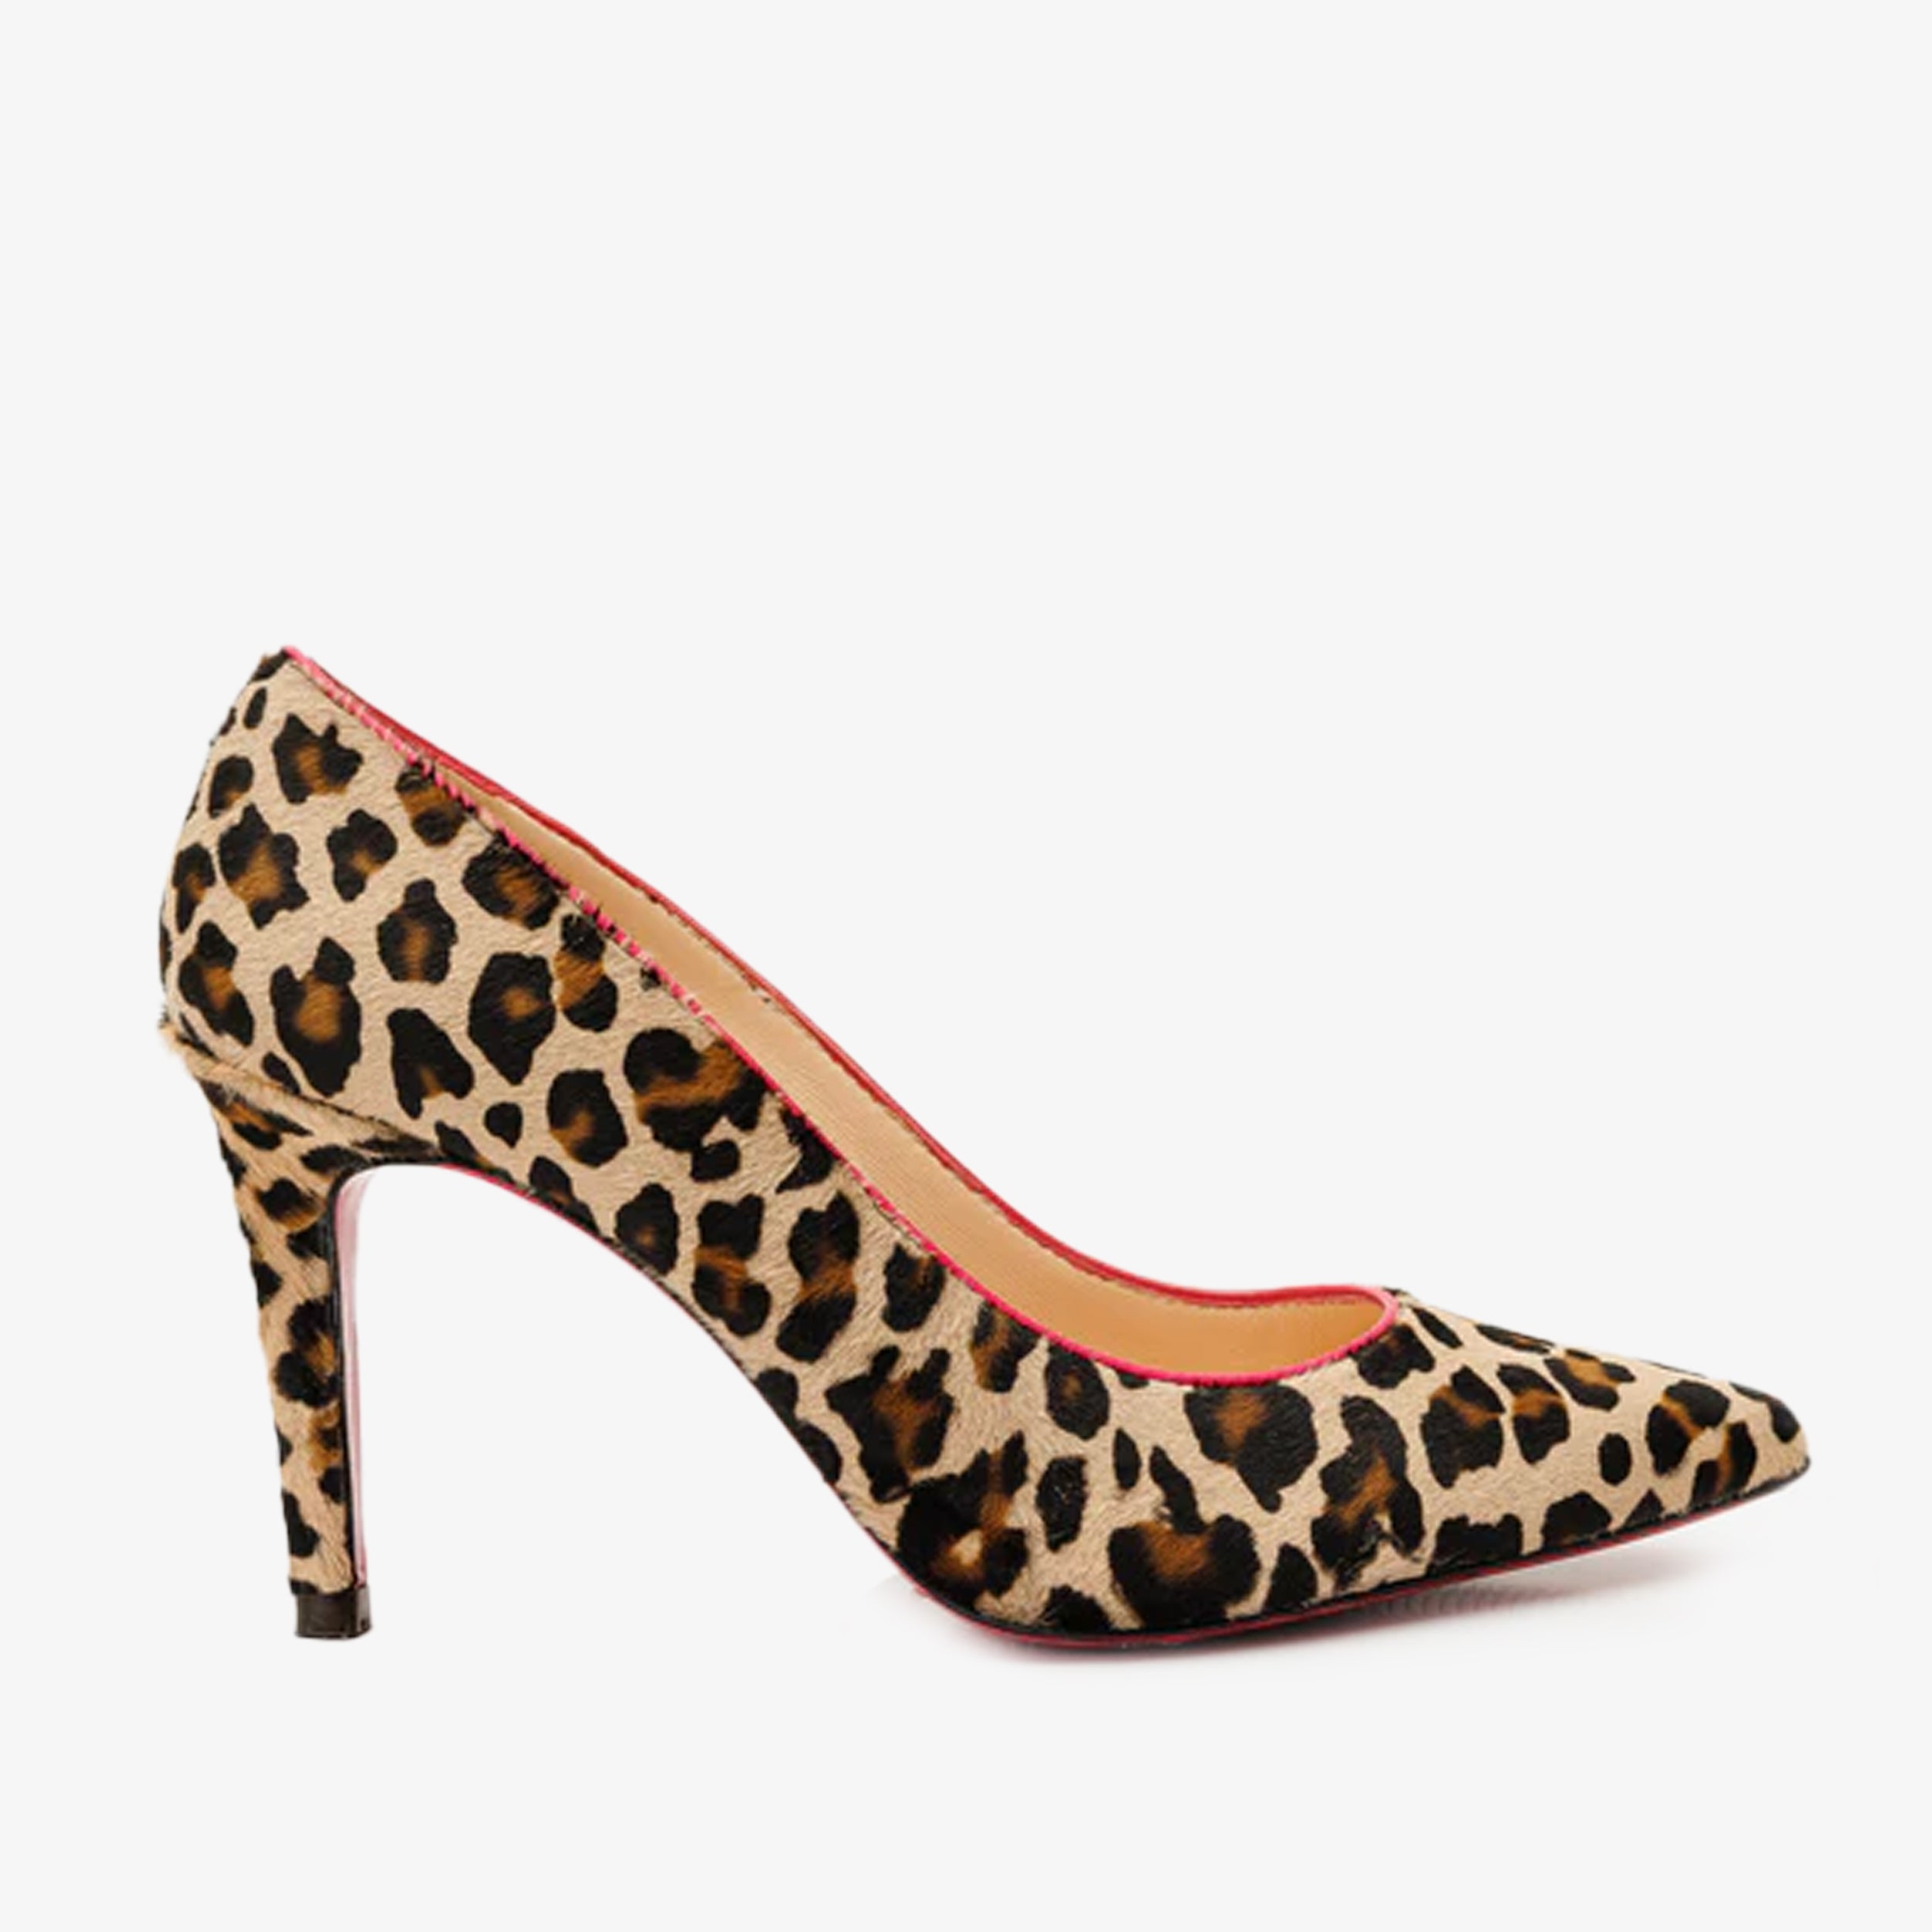 The Olbia Leopard Leather Pump Fuchsia Sole Women Shoe